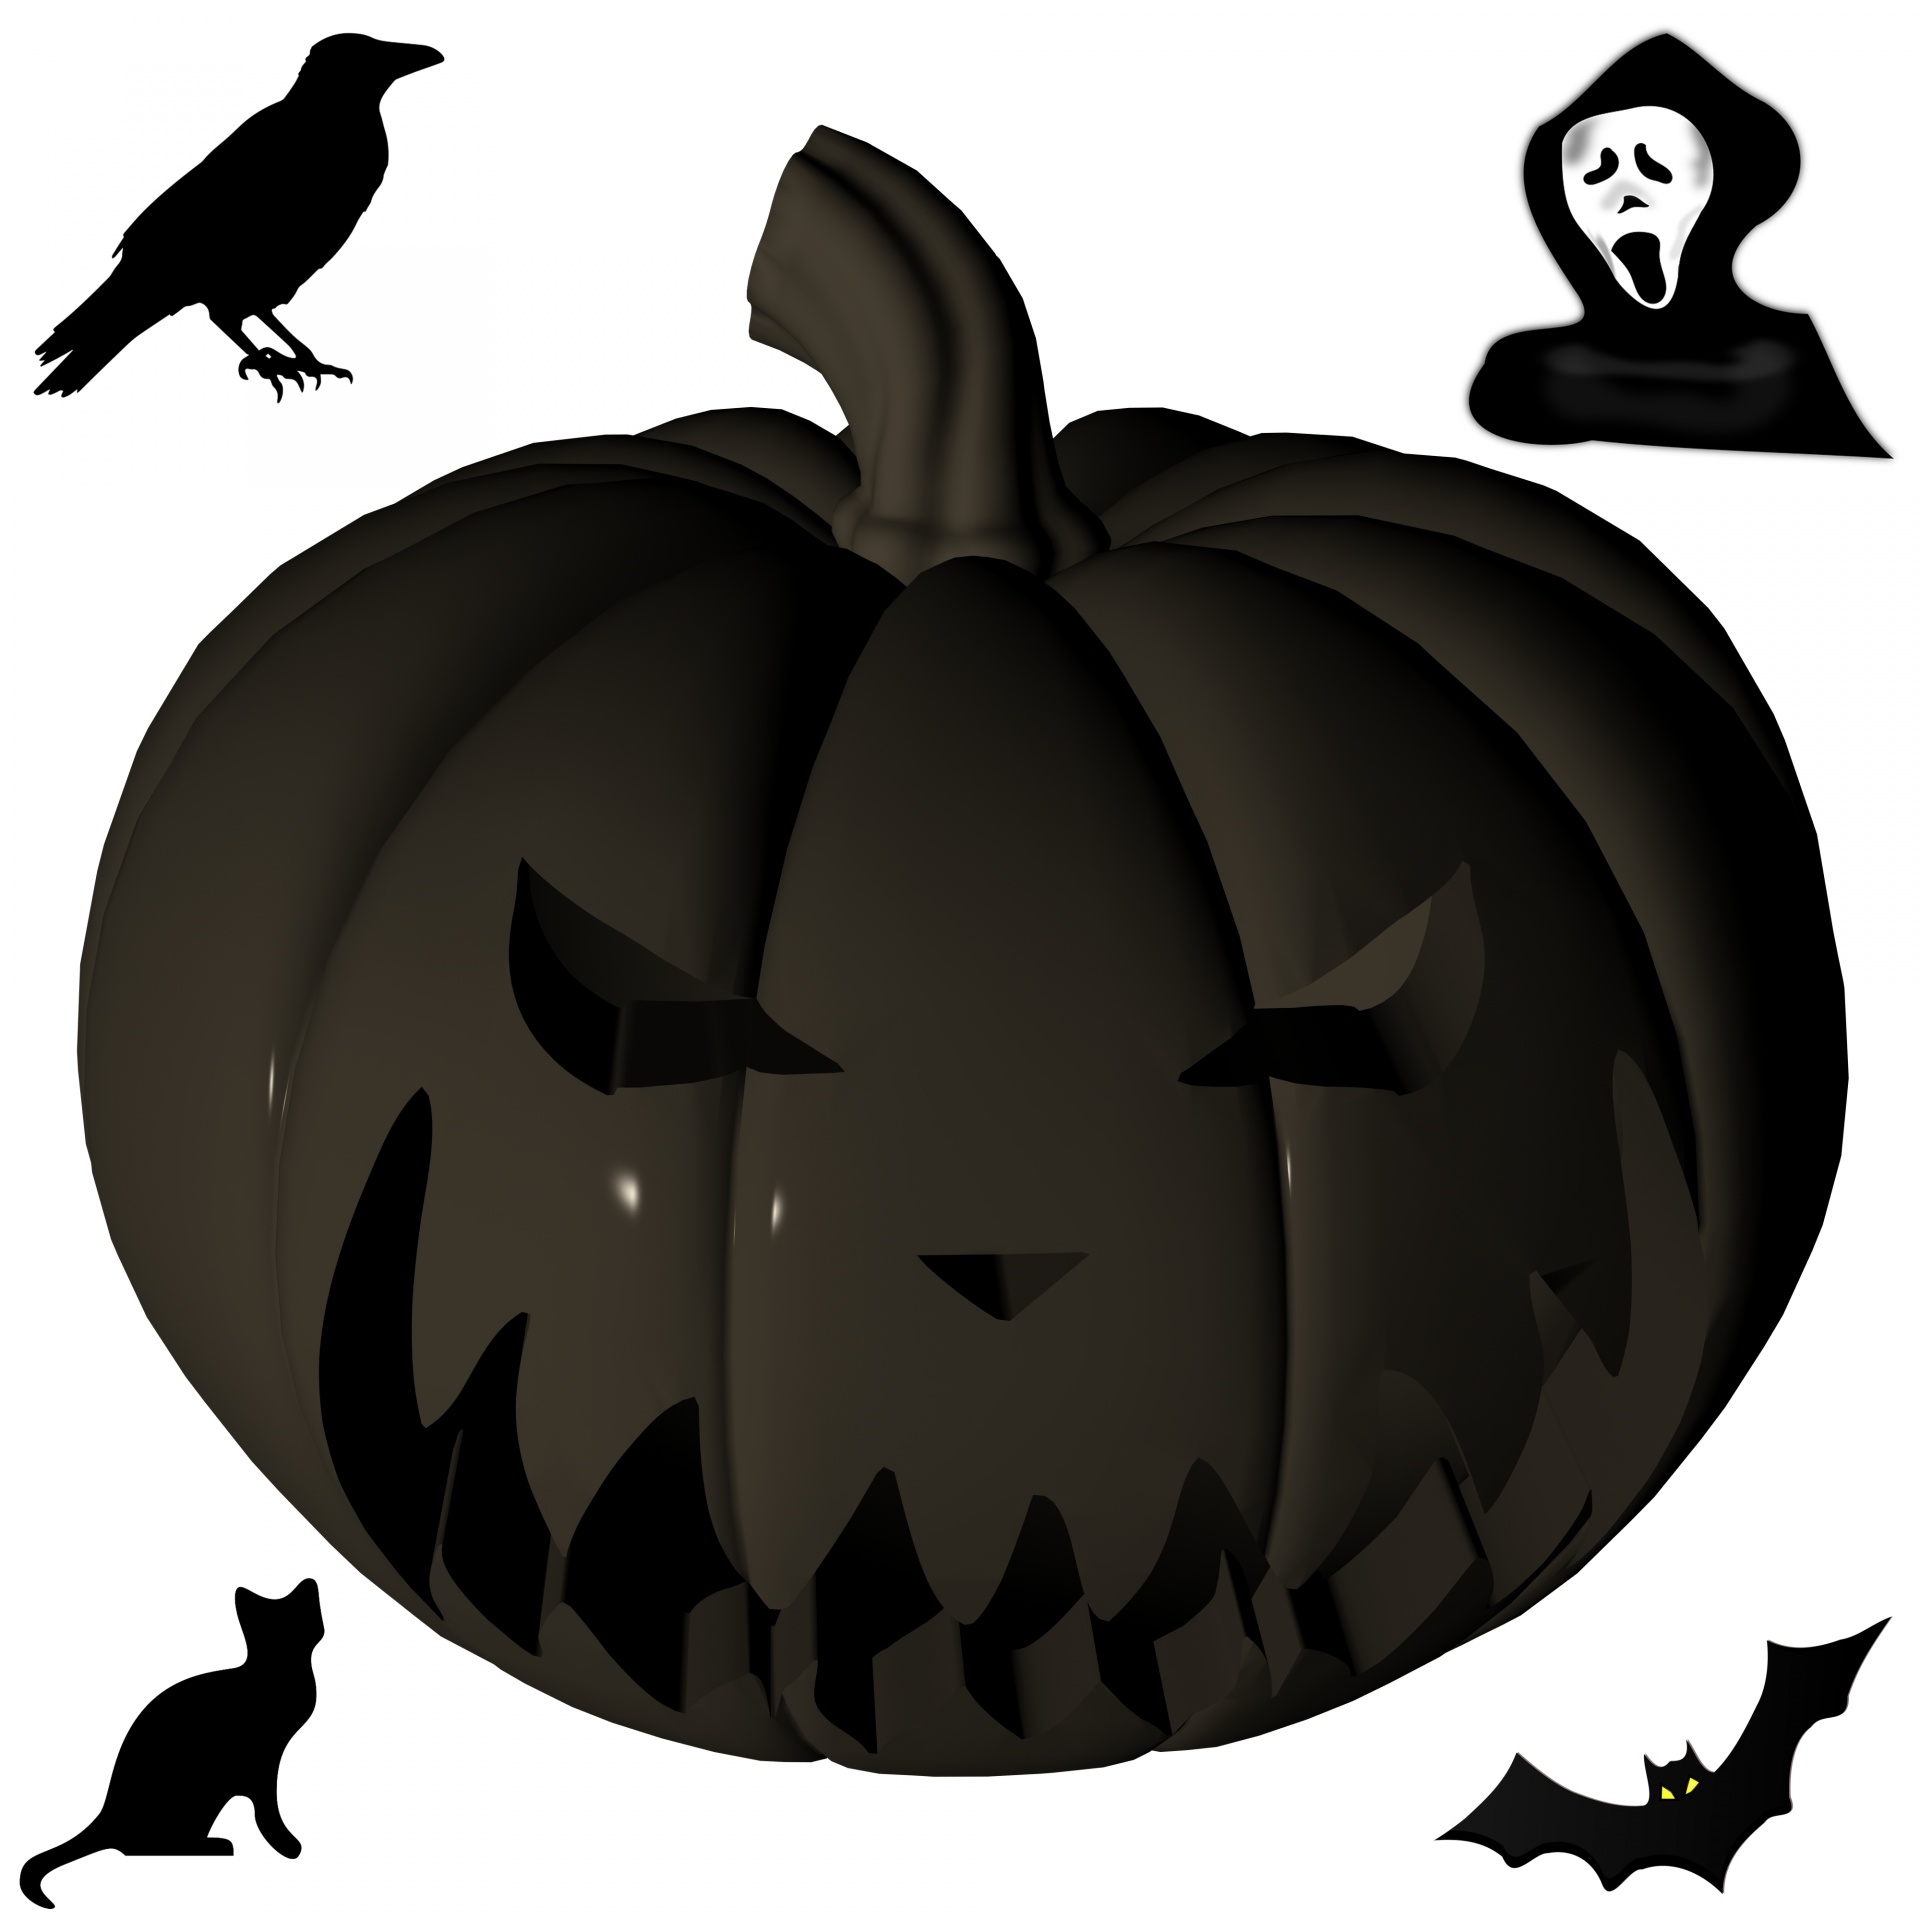 Crow,ghost,bat,cat,halloween - free photo from needpix.com AMP.